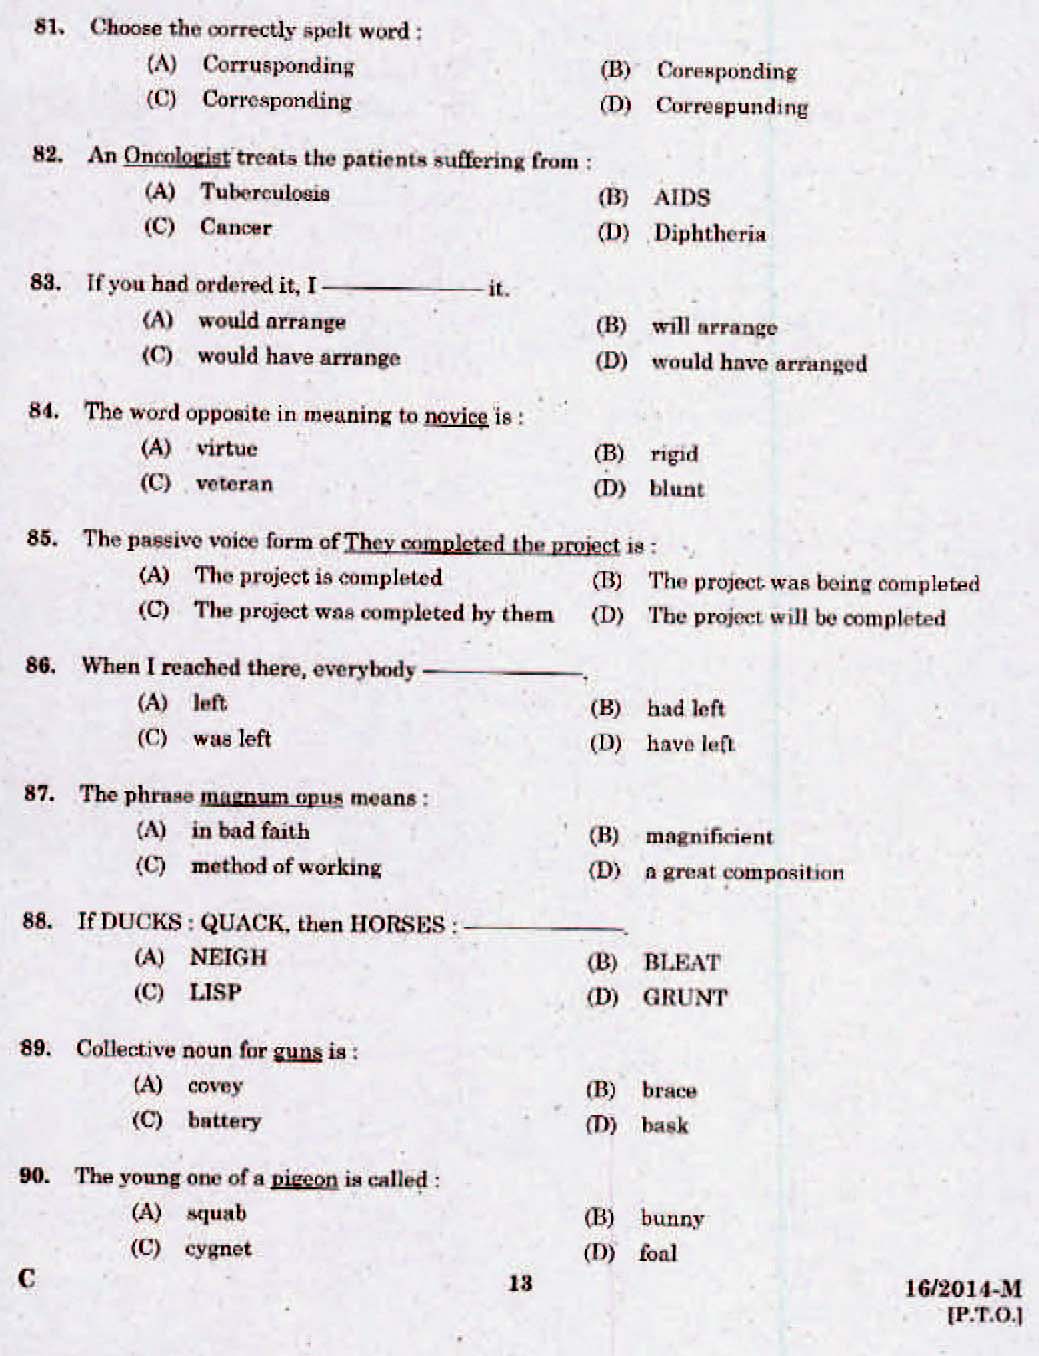 LD Clerk Kottayam Question Paper Malayalam 2014 Paper Code 162014 M 12